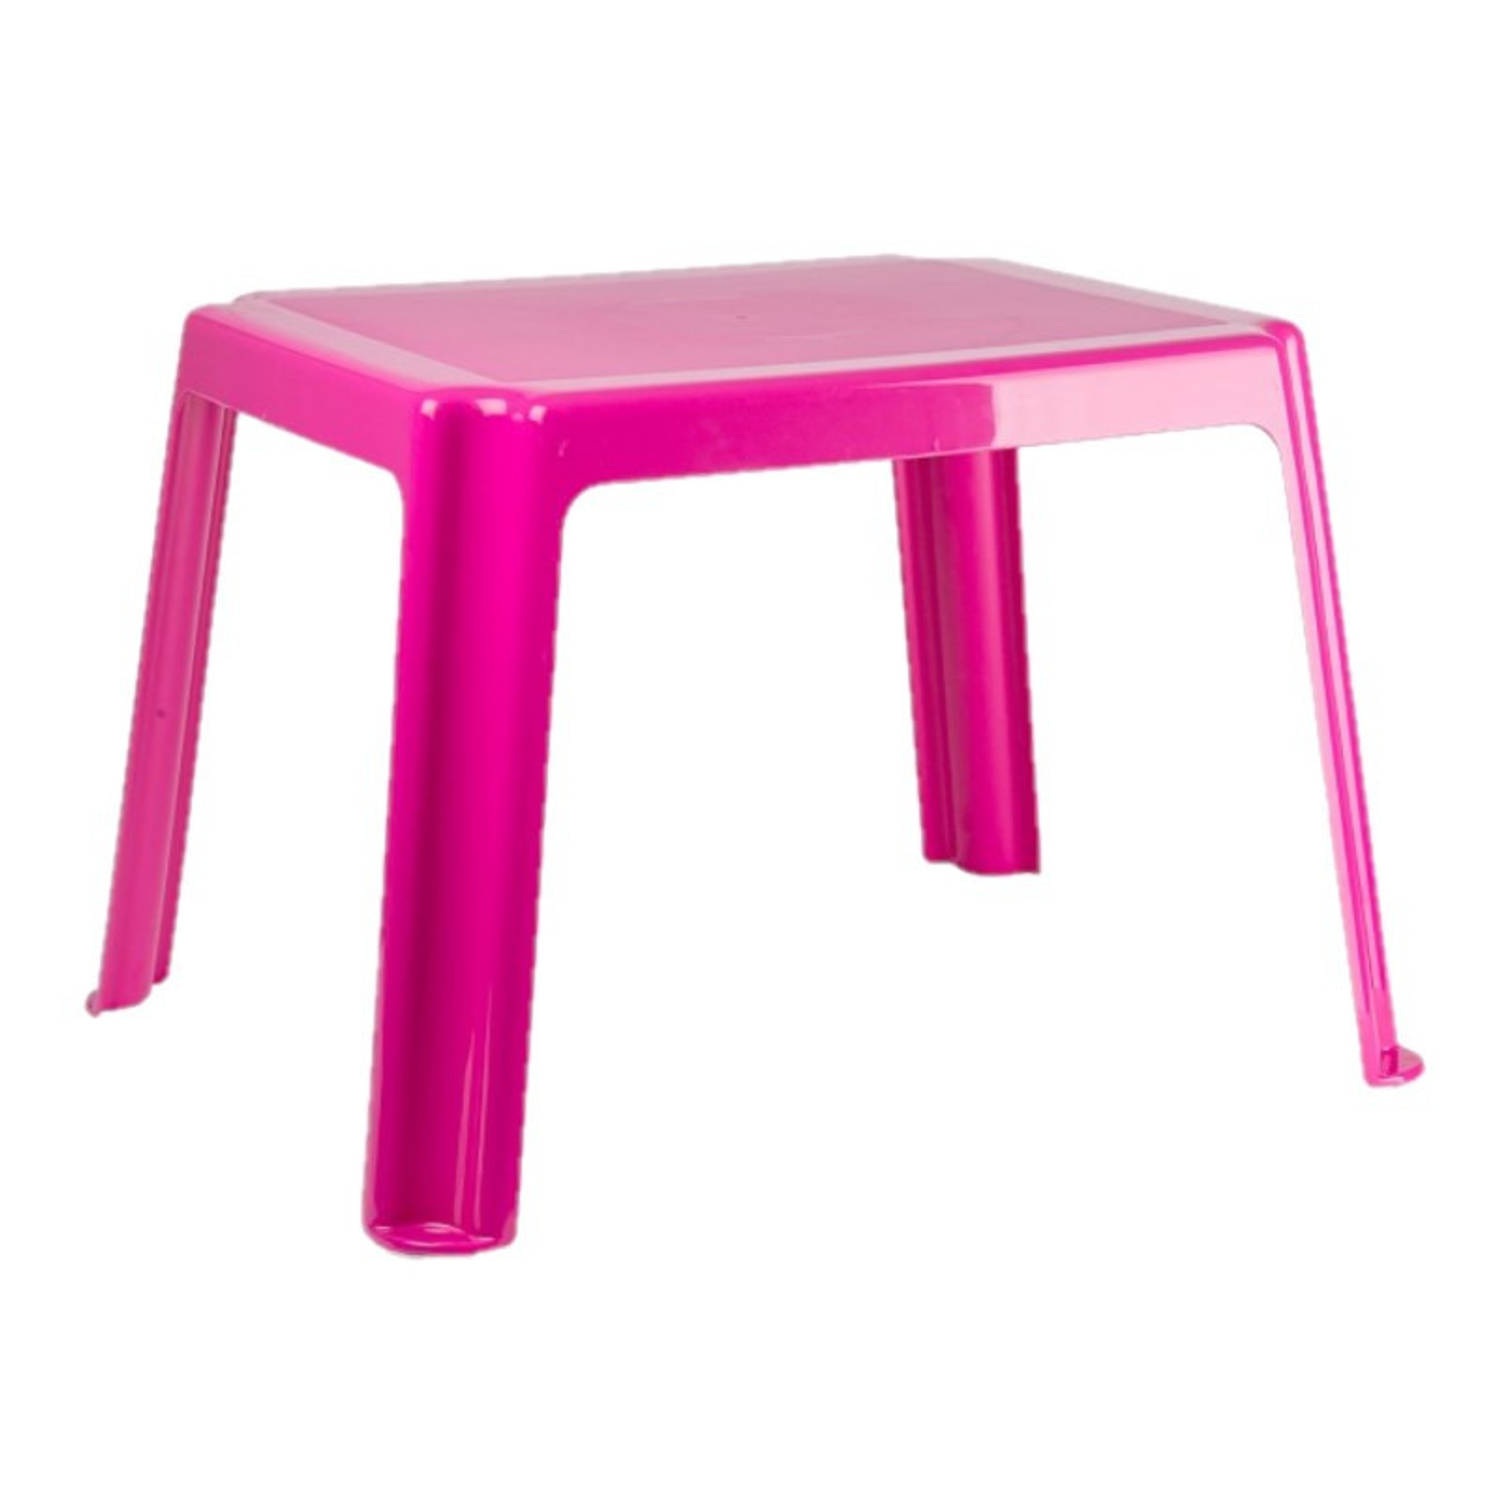 Kunststof kindertafel roze 55 x 66 x 43 cm - Bijzettafels